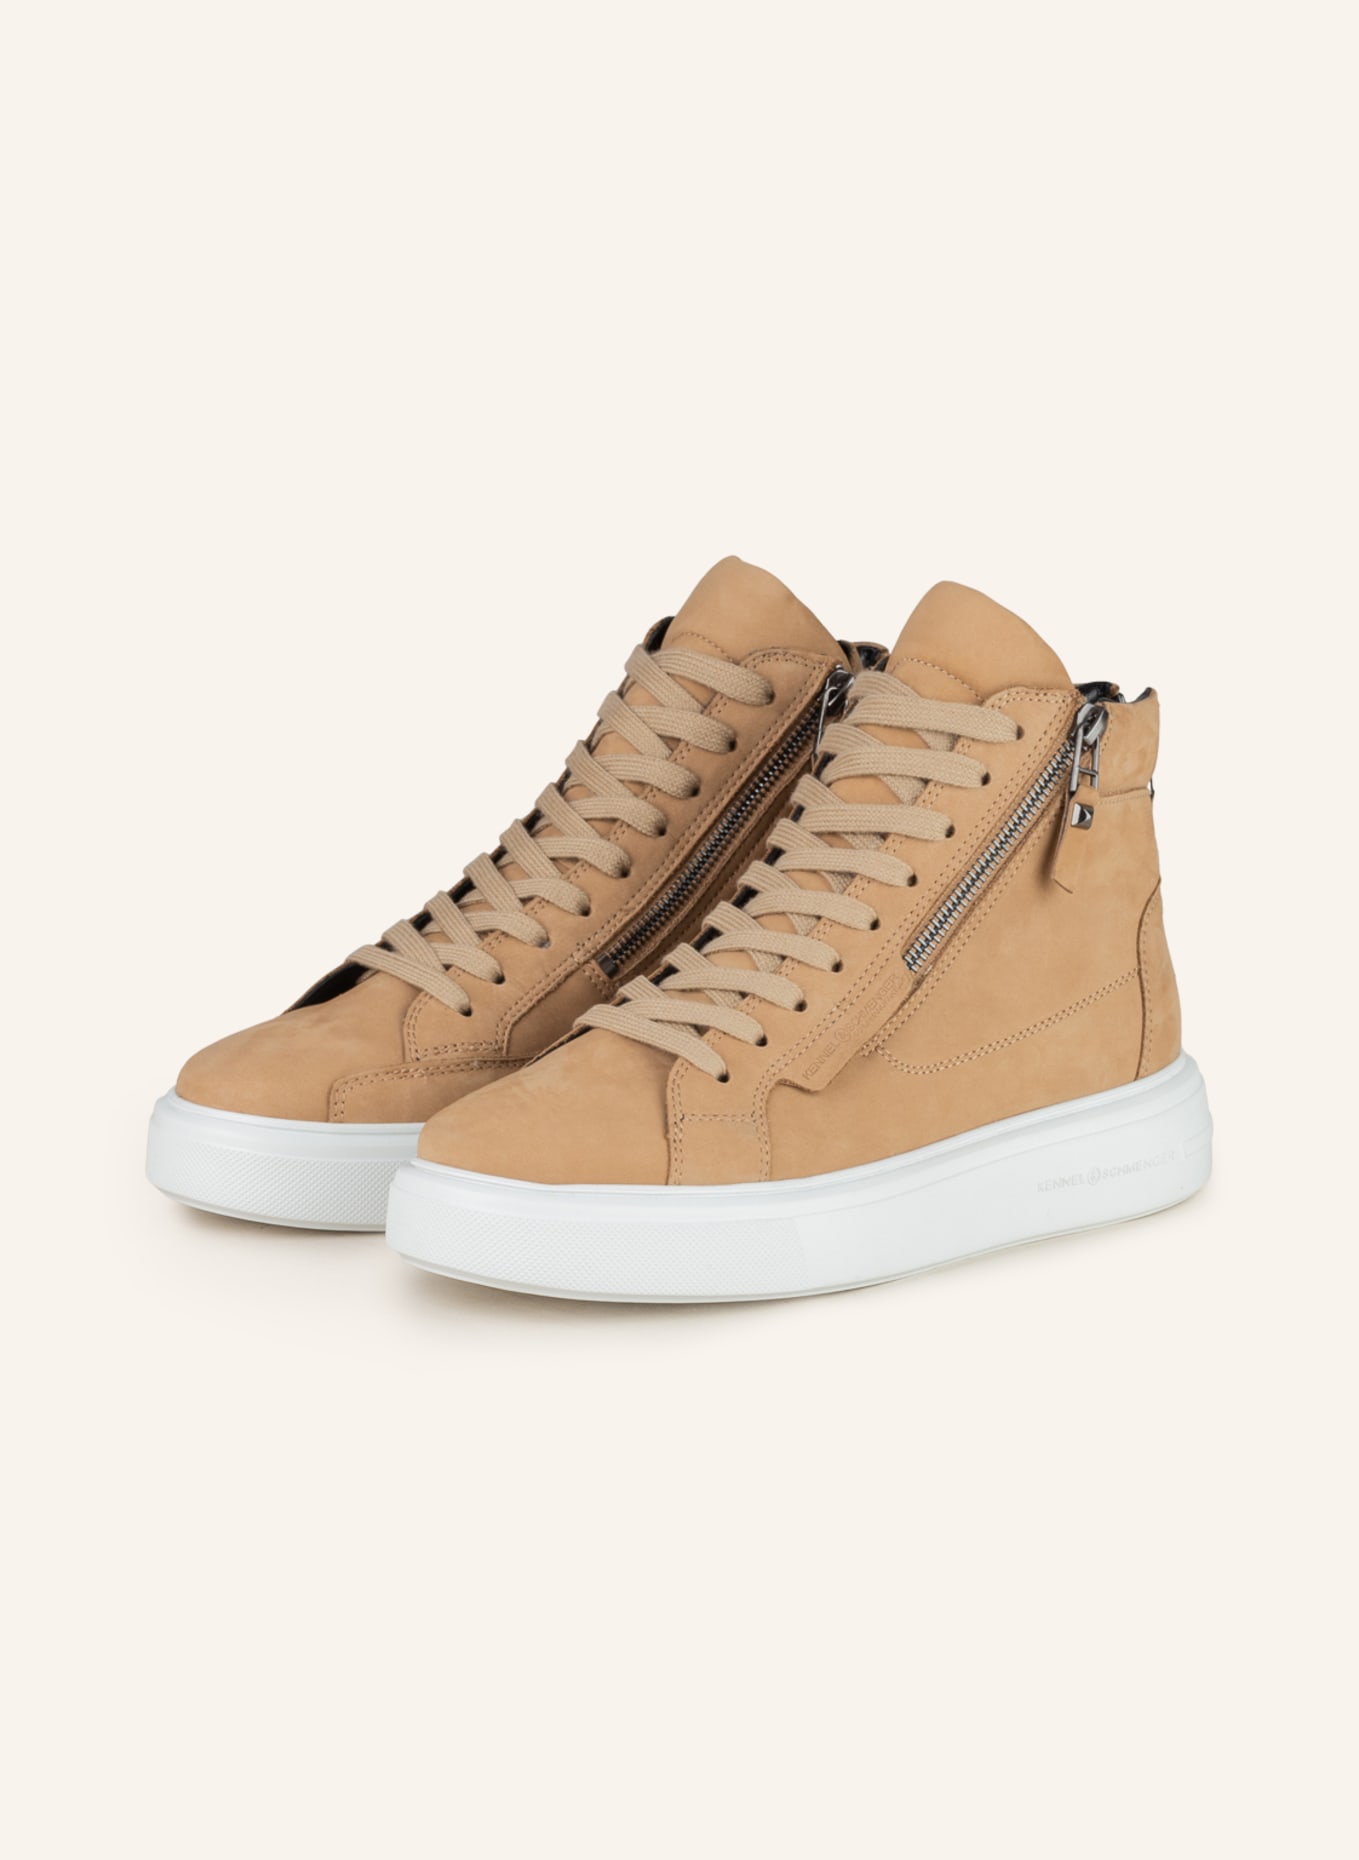 KENNEL & SCHMENGER Hightop-Sneaker PRO, Farbe: CAMEL (Bild 1)